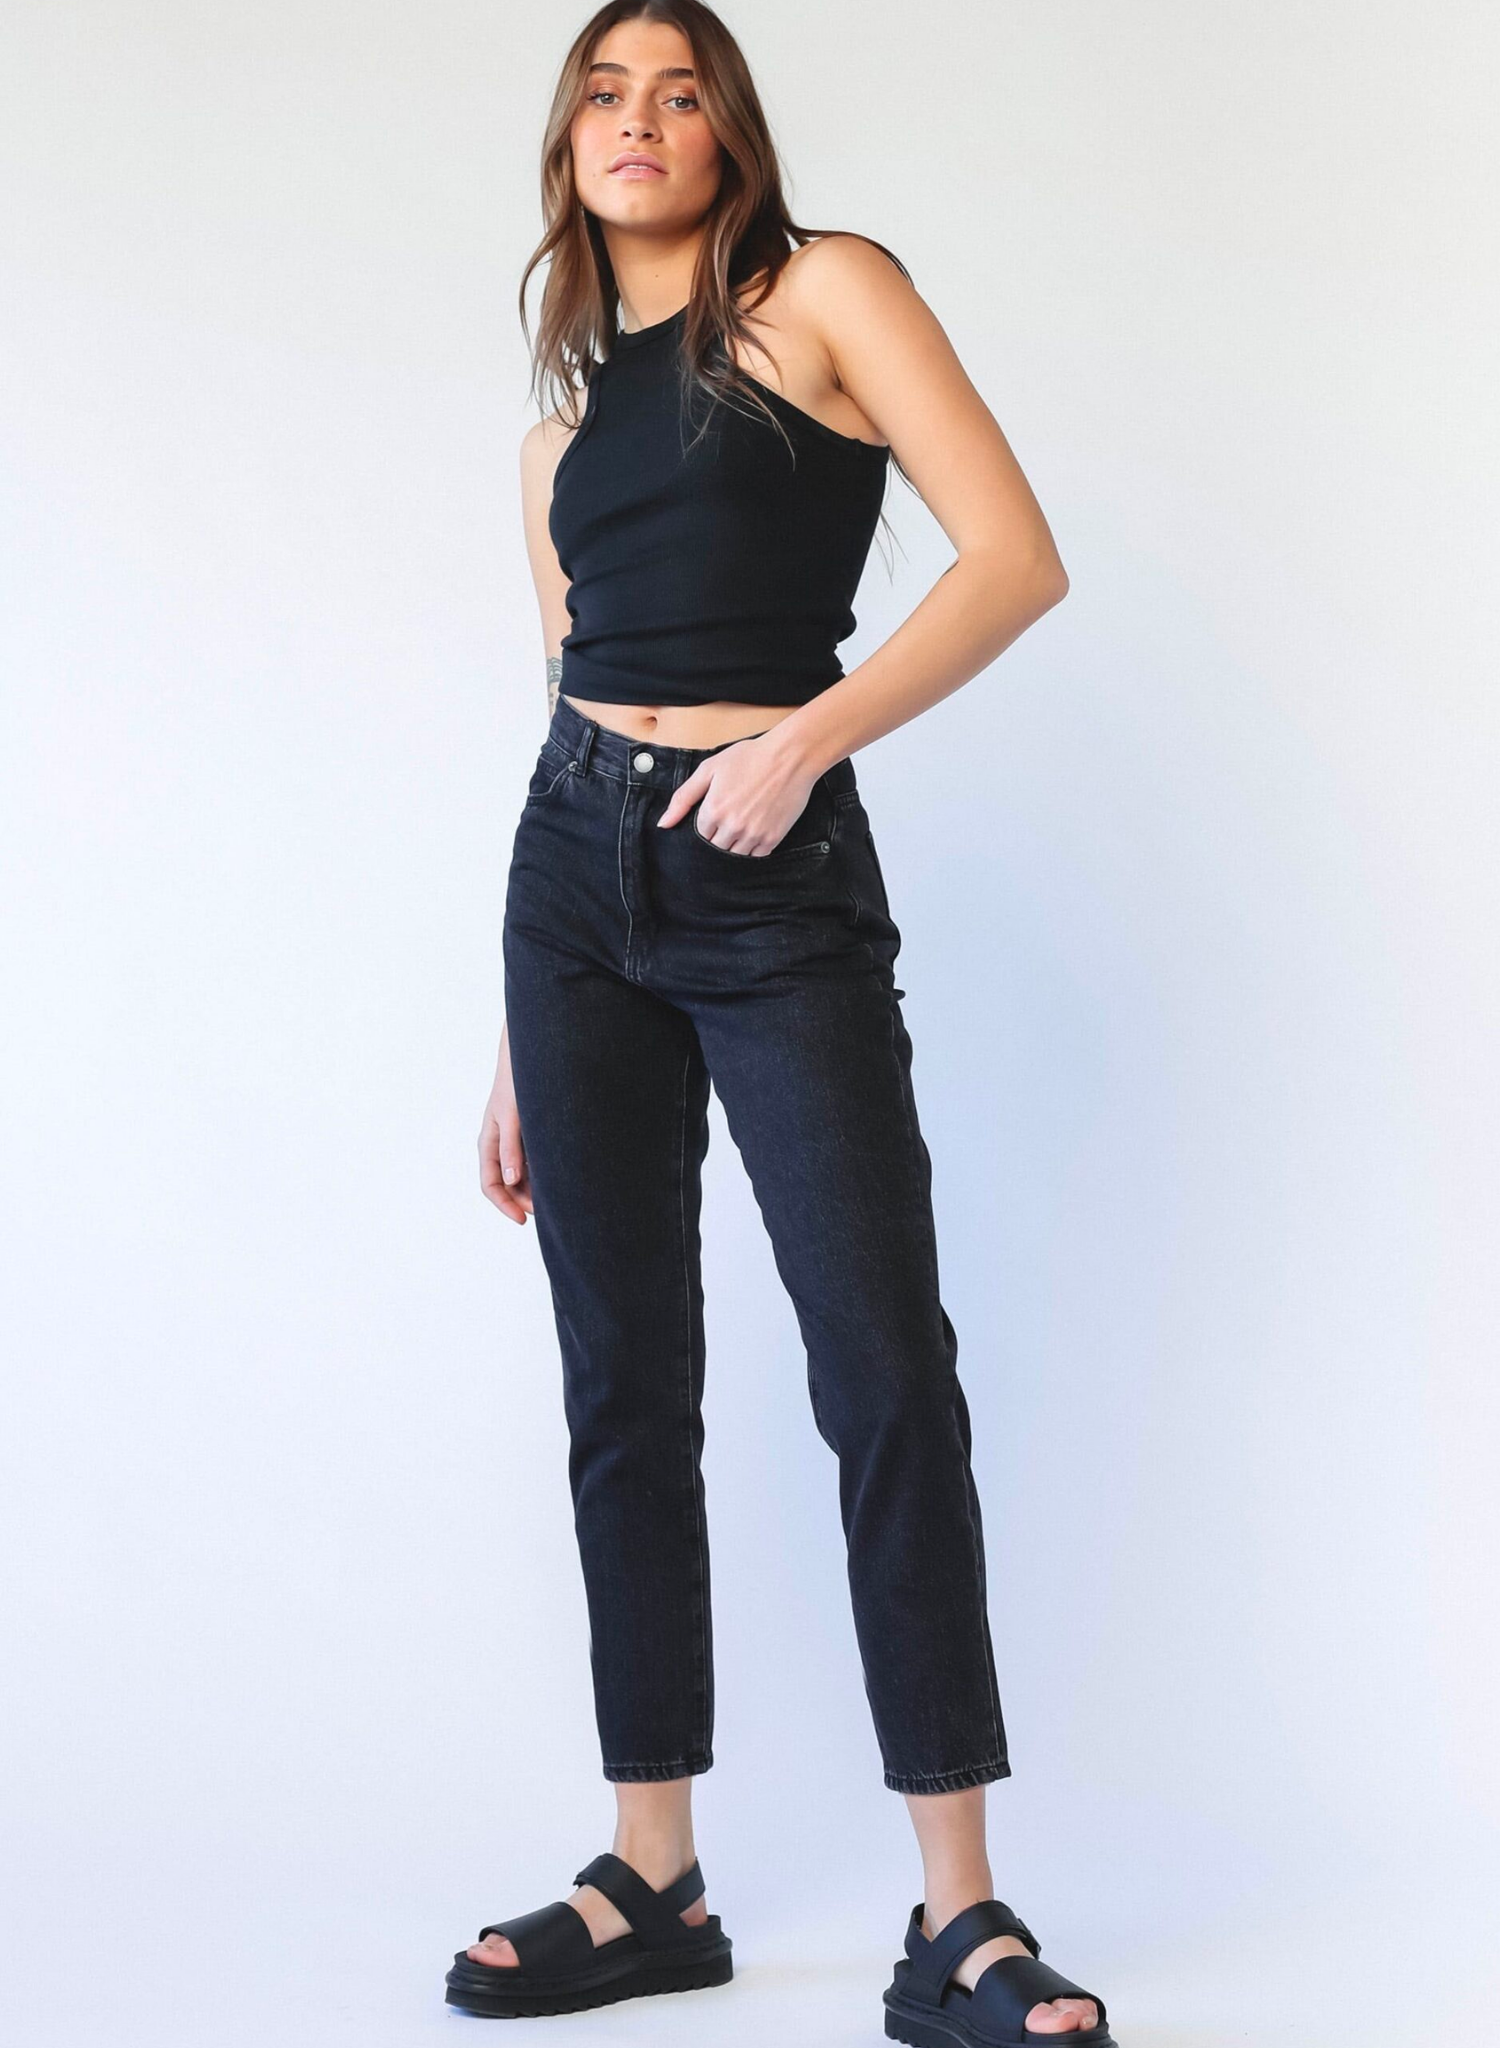 Nora Jeans in Black Retro